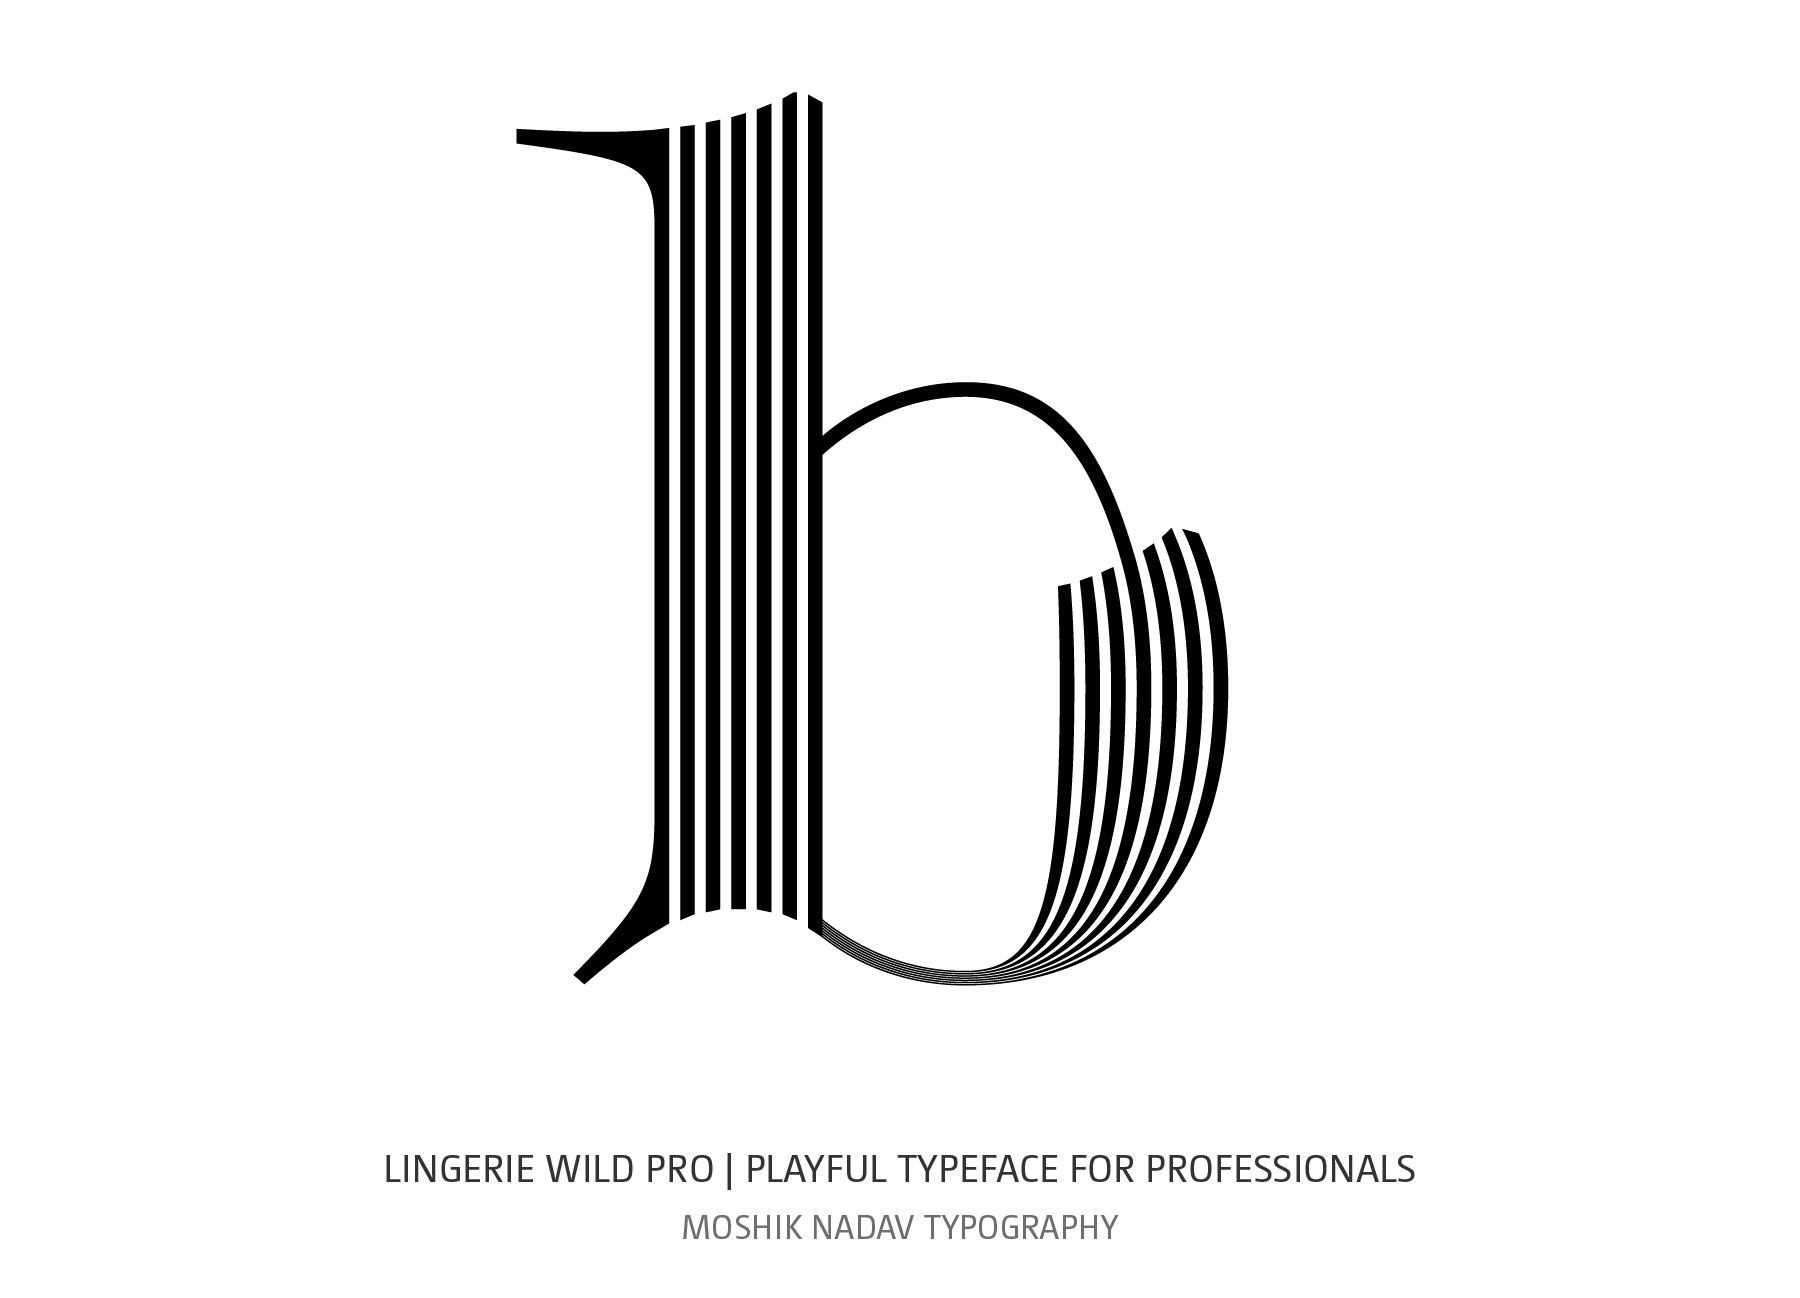 Lingerie Wild Pro Typeface visage styles designed by Moshik Nadav Typography